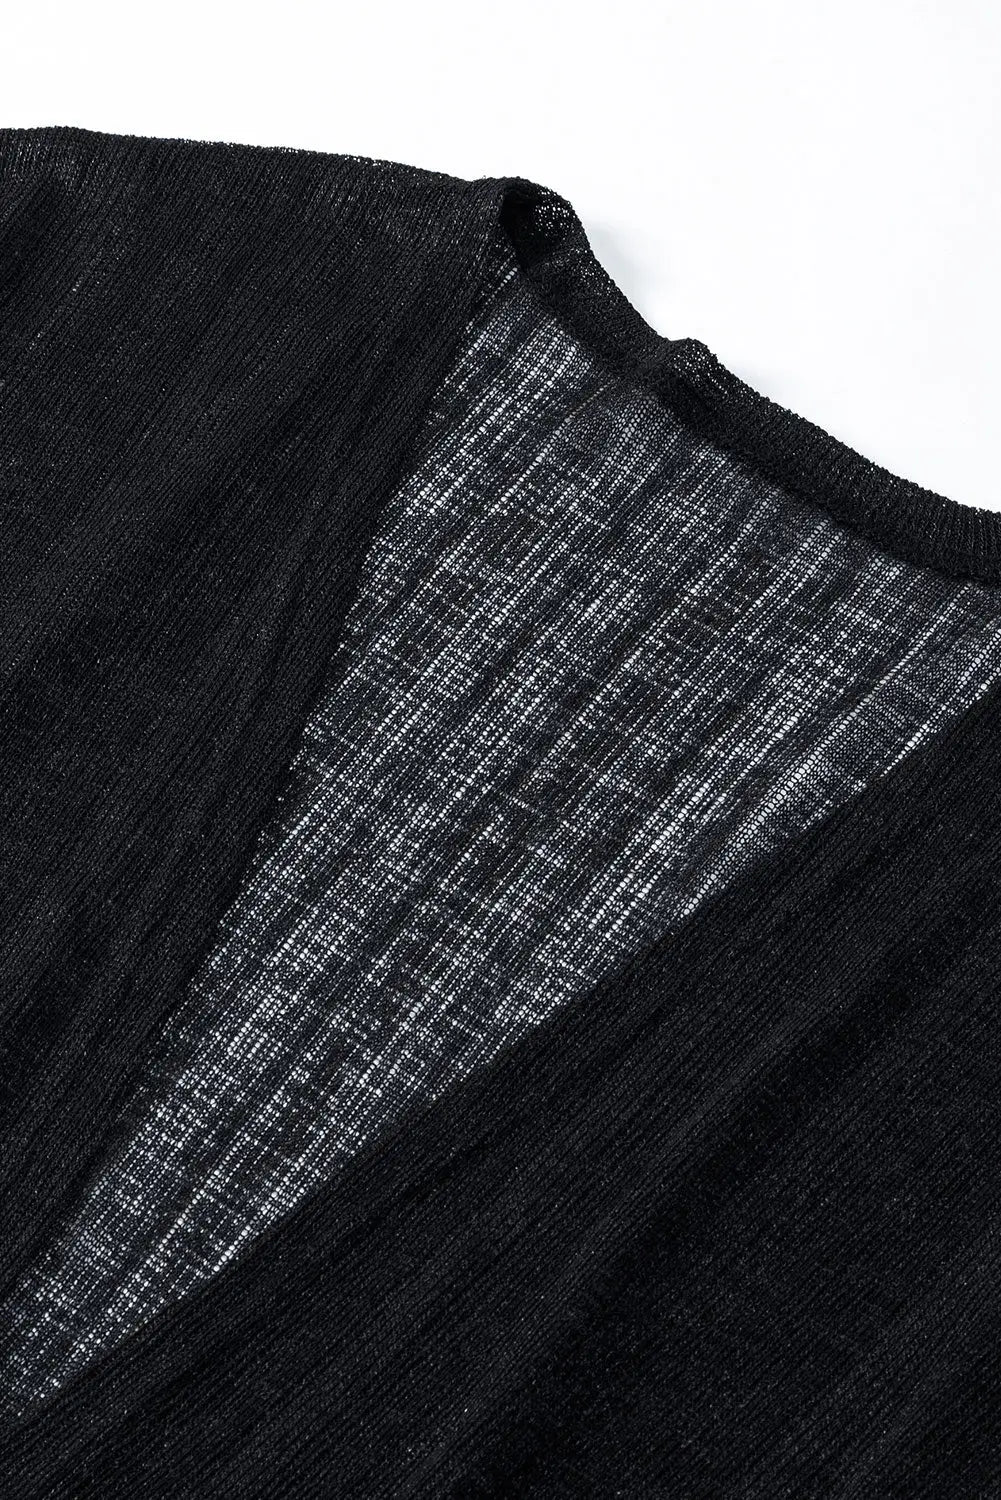 Black sheer lightweight knit long sleeve cardigan - sweaters & cardigans